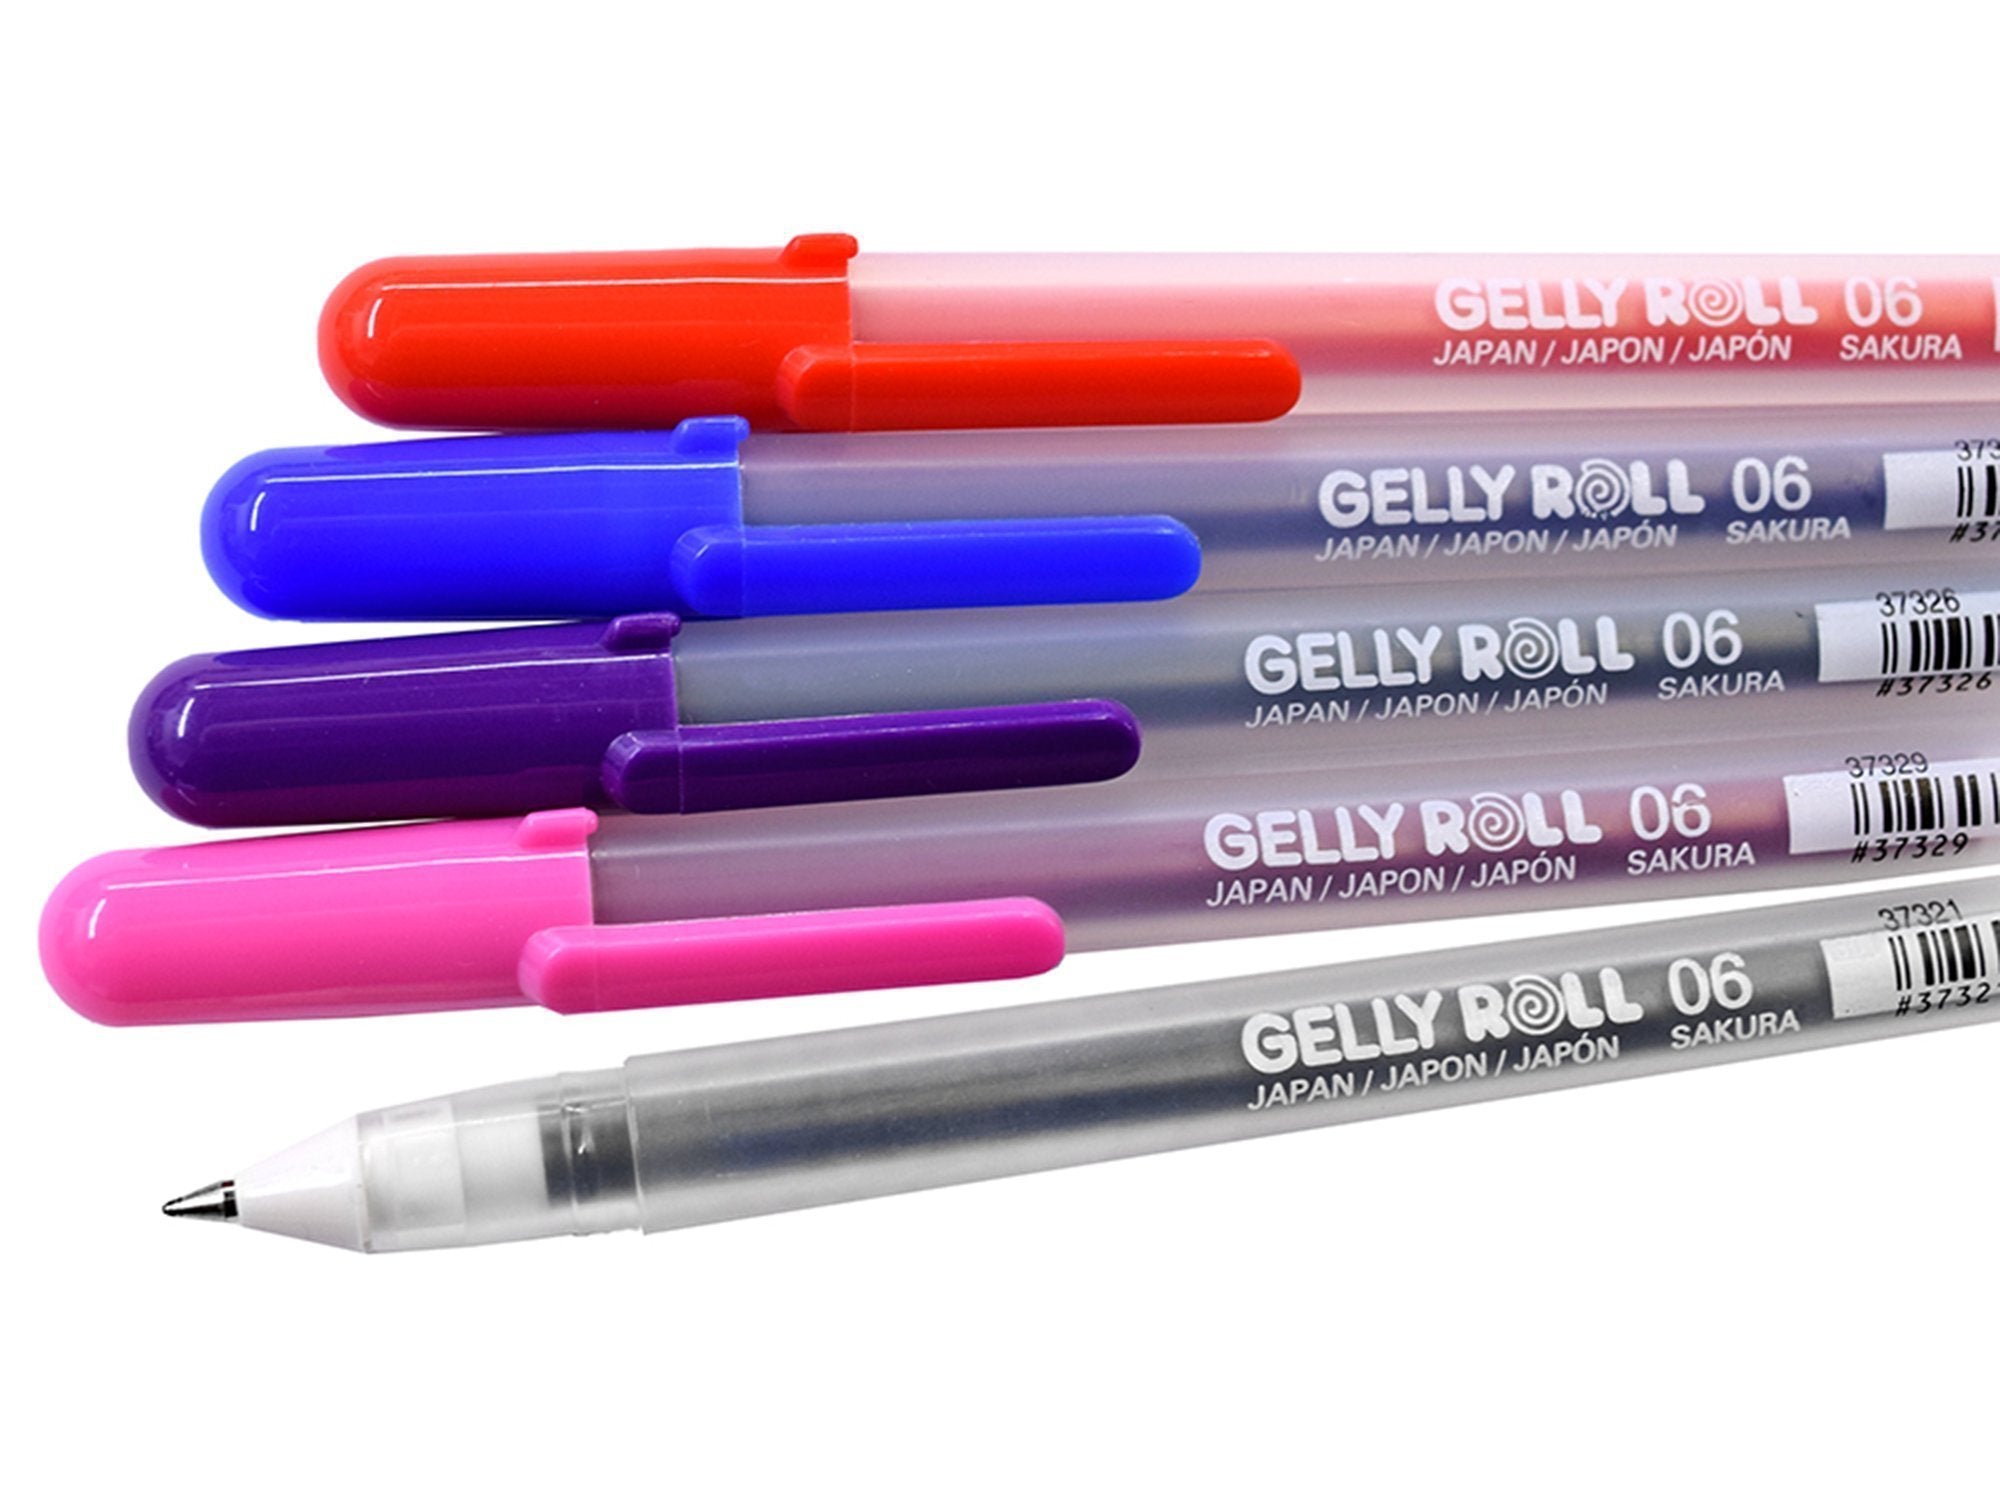 Gelly Roll® Classic™ White Gel Pen, 3ct.